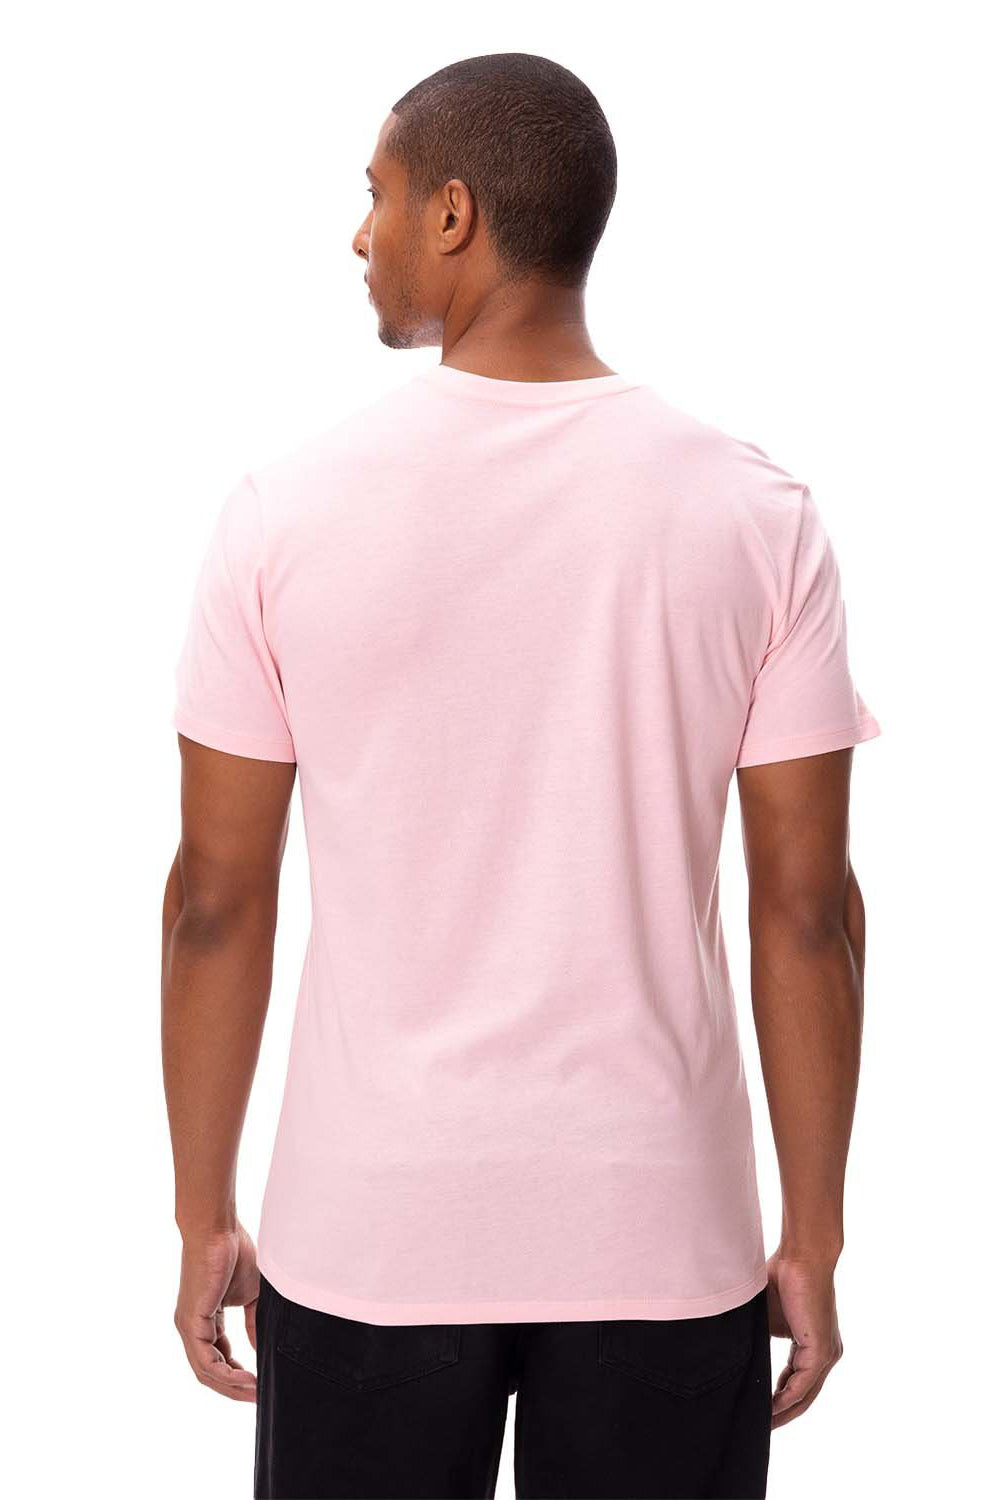 Threadfast Apparel 180A Mens Ultimate Short Sleeve Crewneck T-Shirt Powder Pink Back